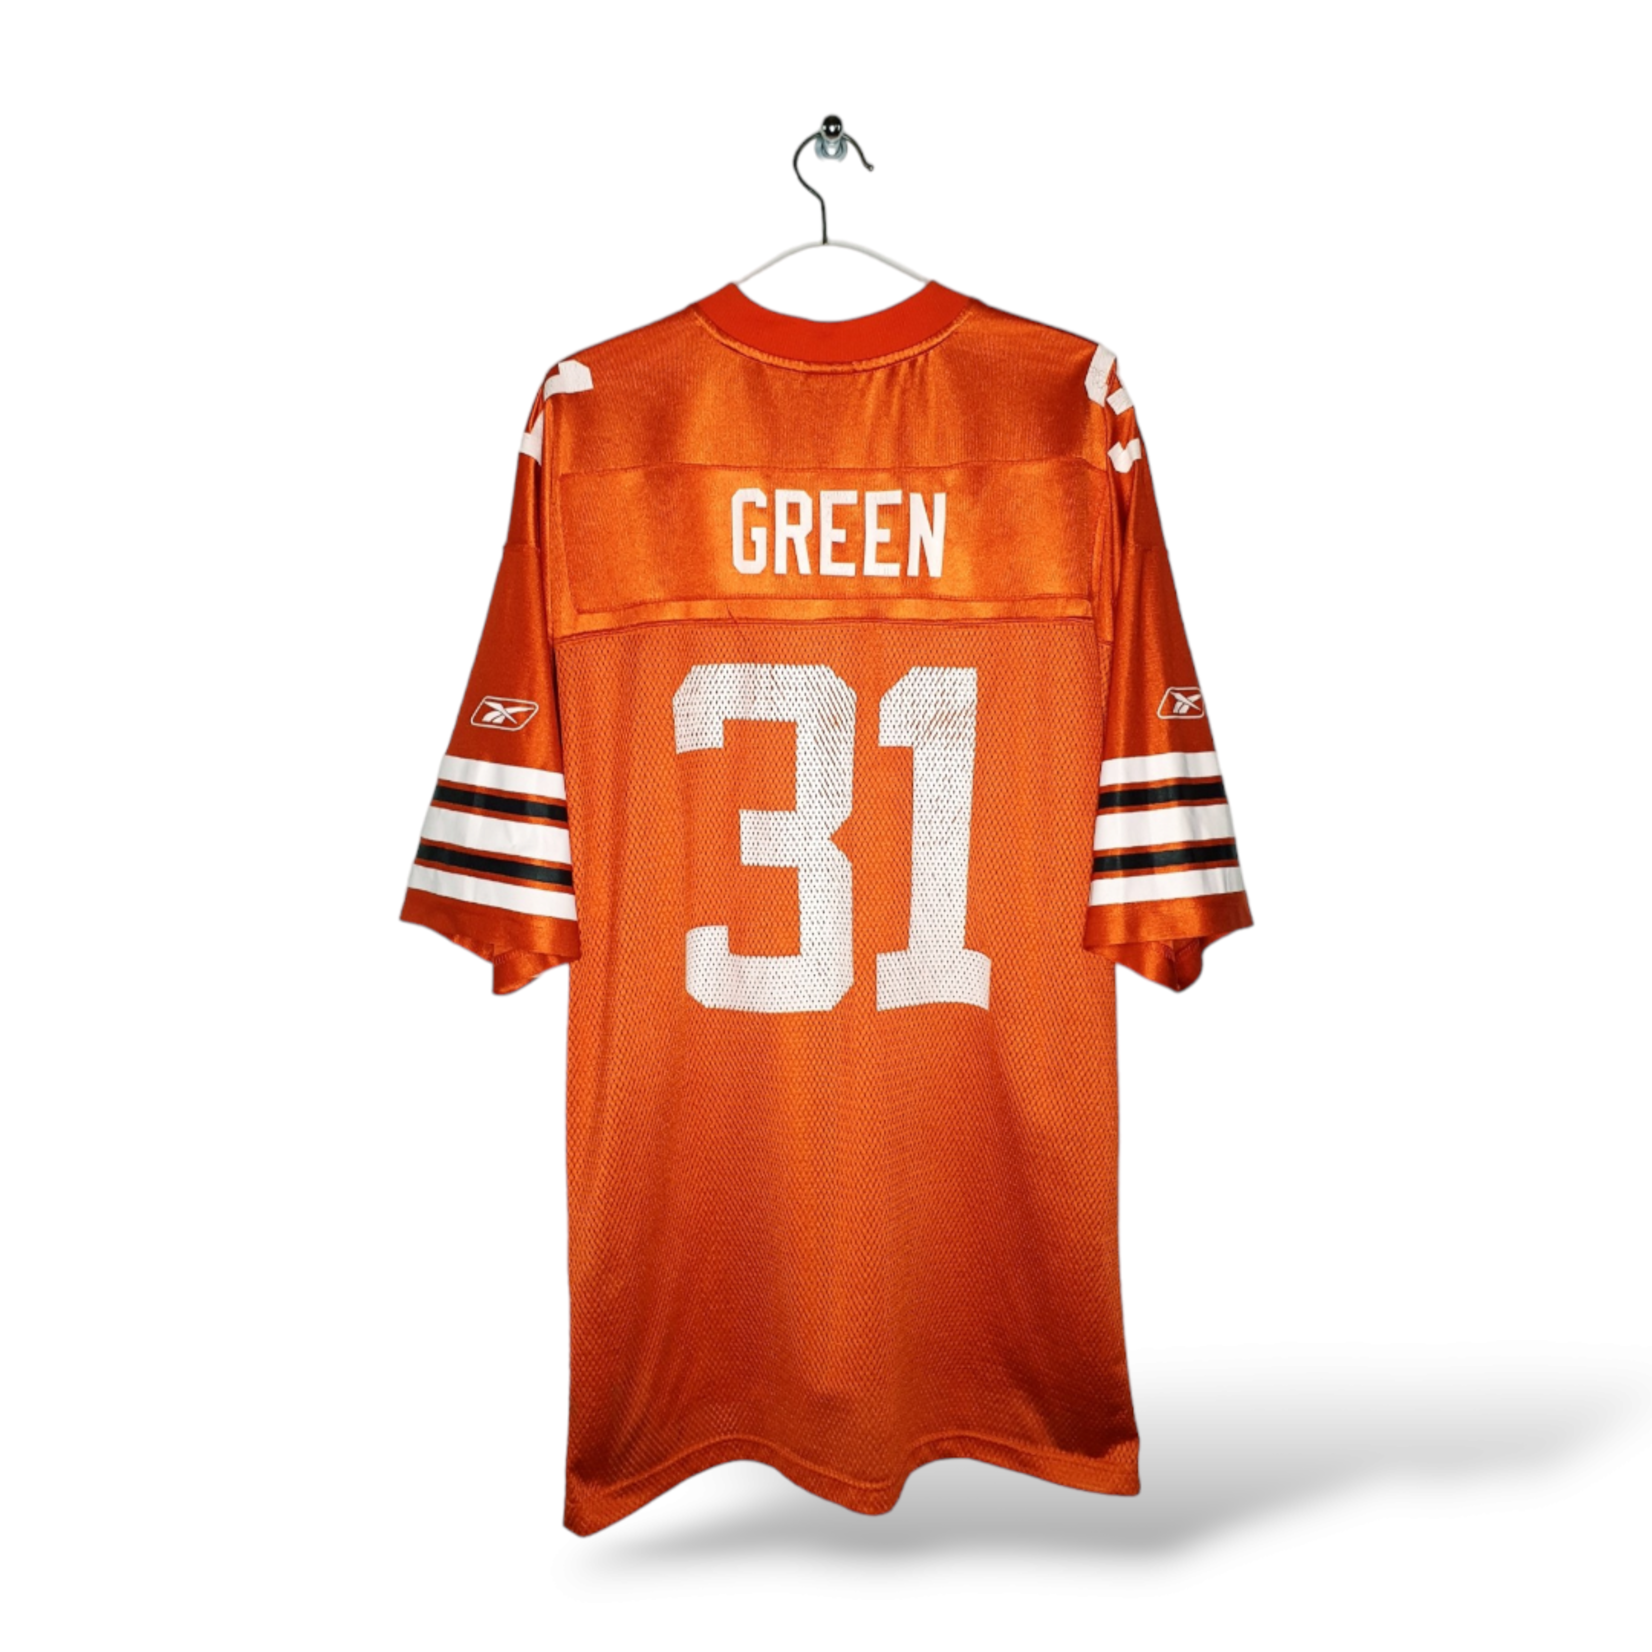 Reebok Origineel Reebok vintage NFL shirt Cleveland Browns - William Greene